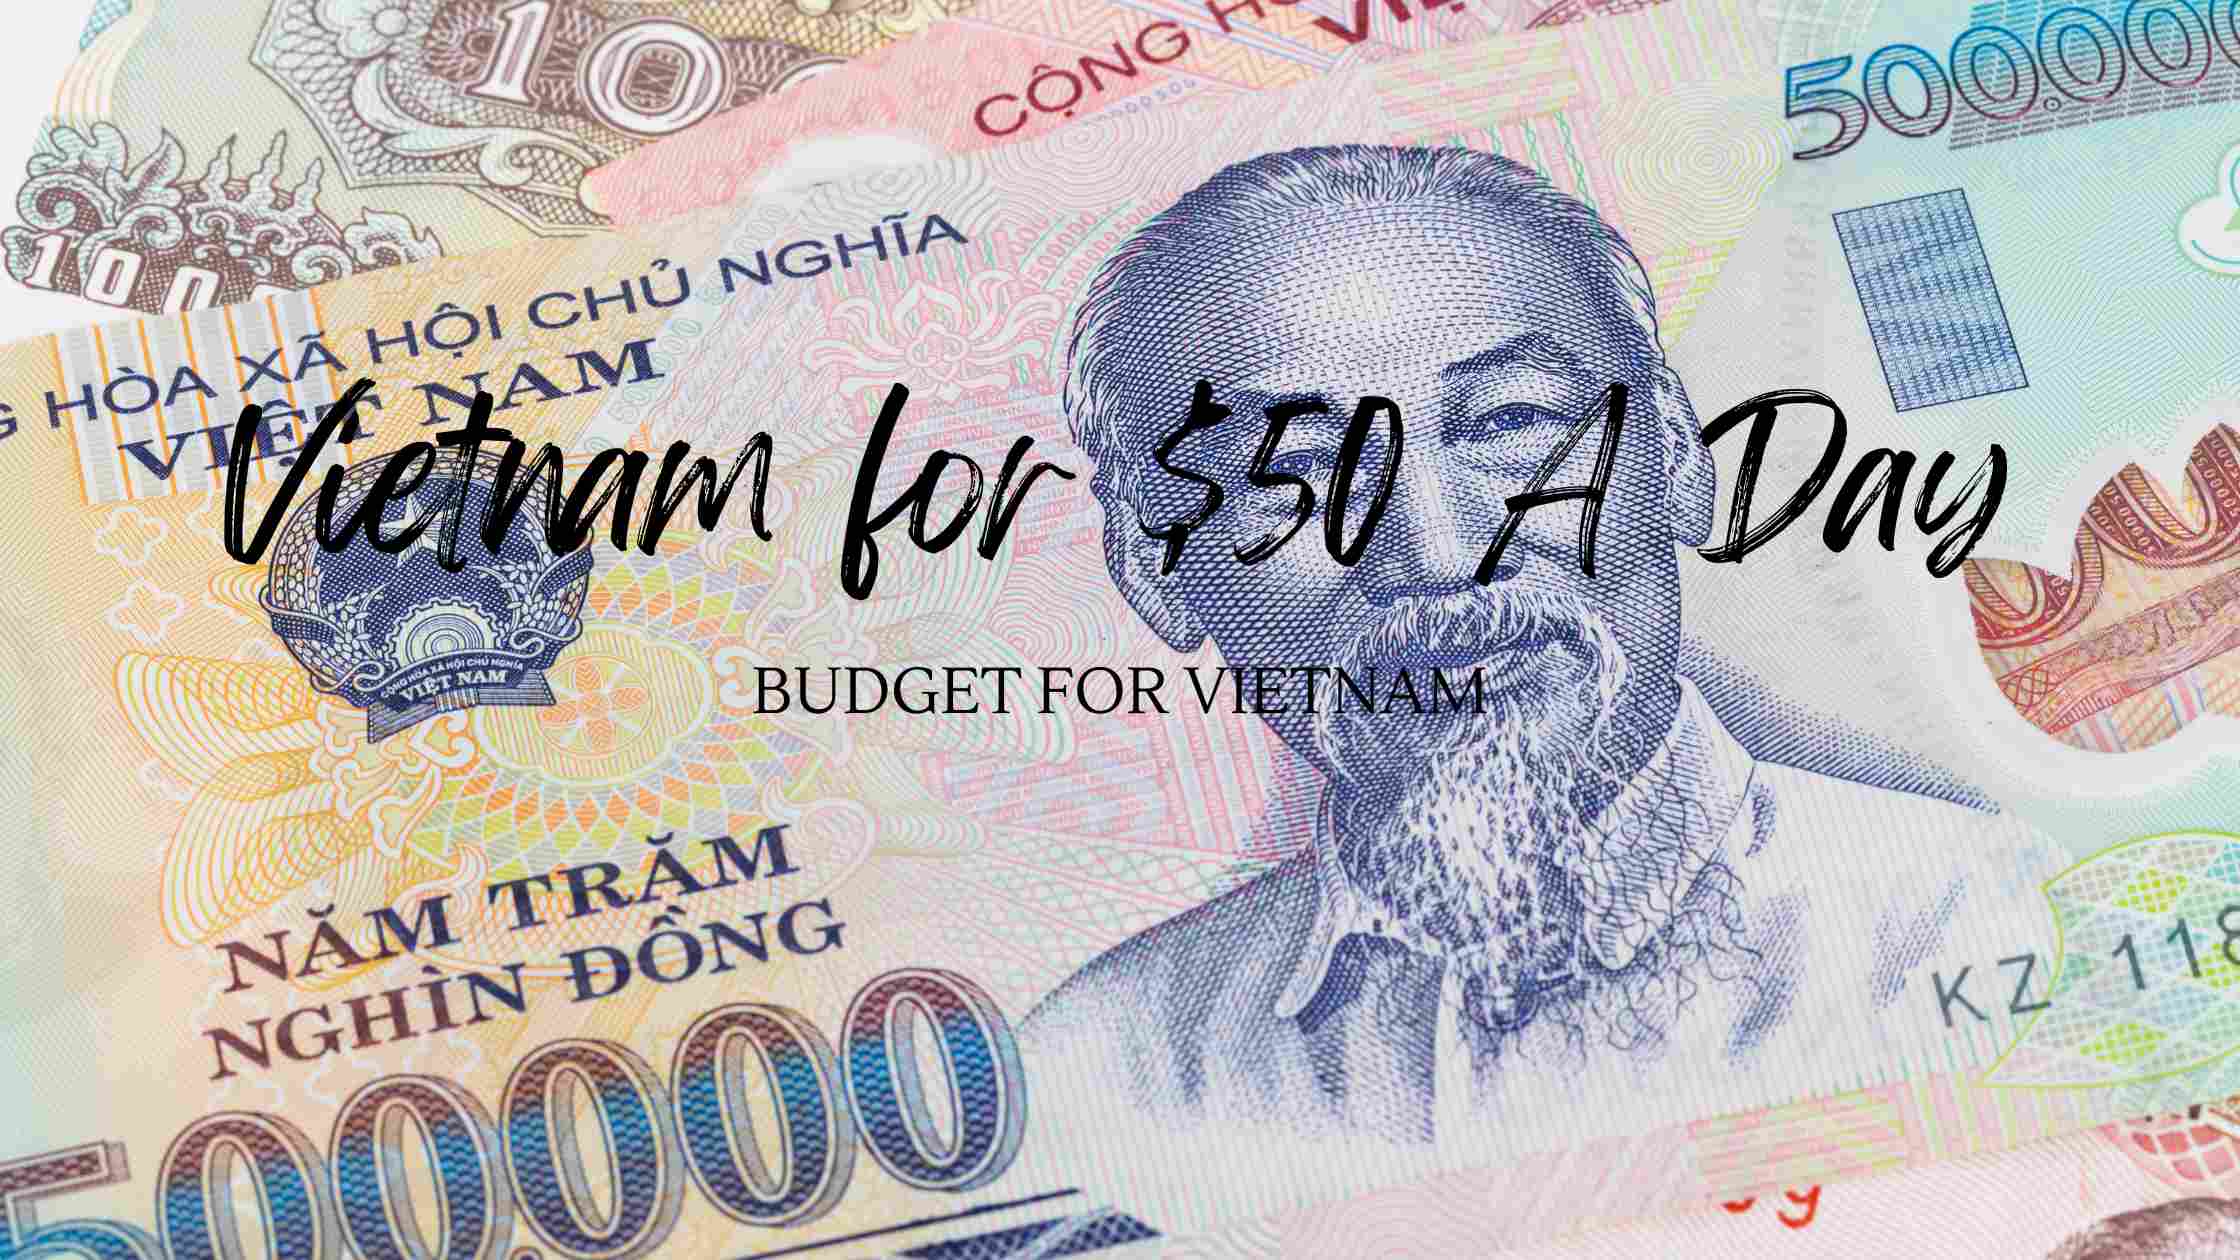 Budget for Vietnam blog post